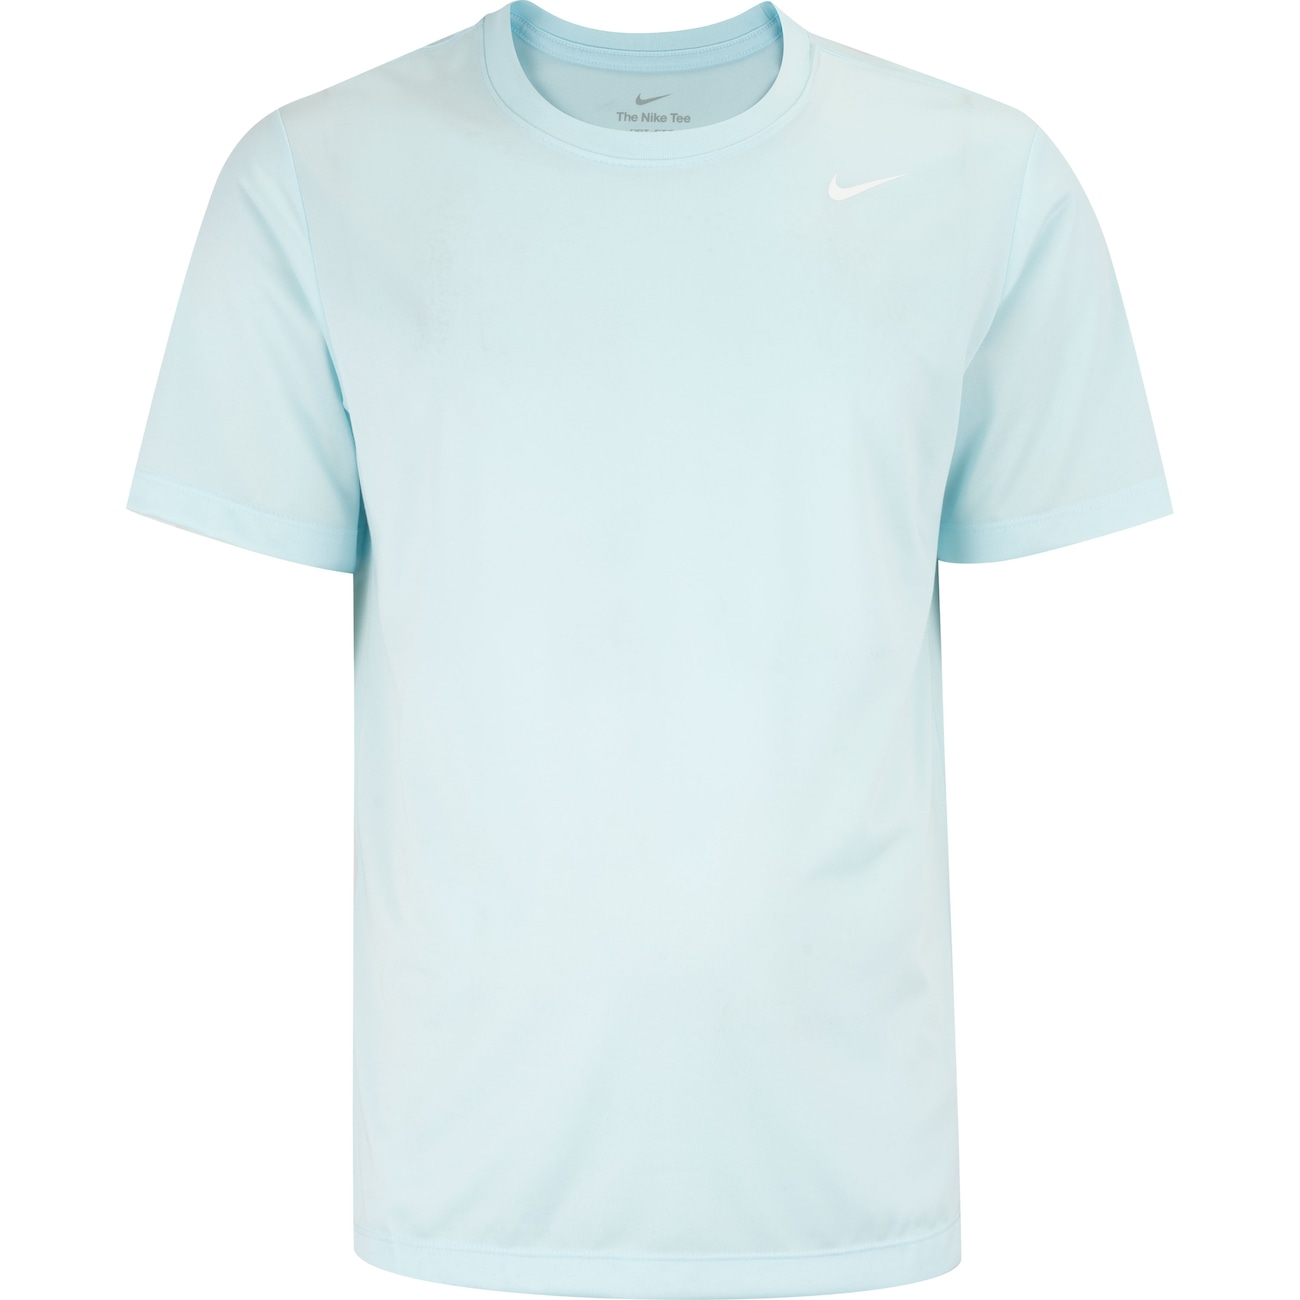 Camiseta Masculina Nike Dri-Fit Manga Curta M180RLGD RE